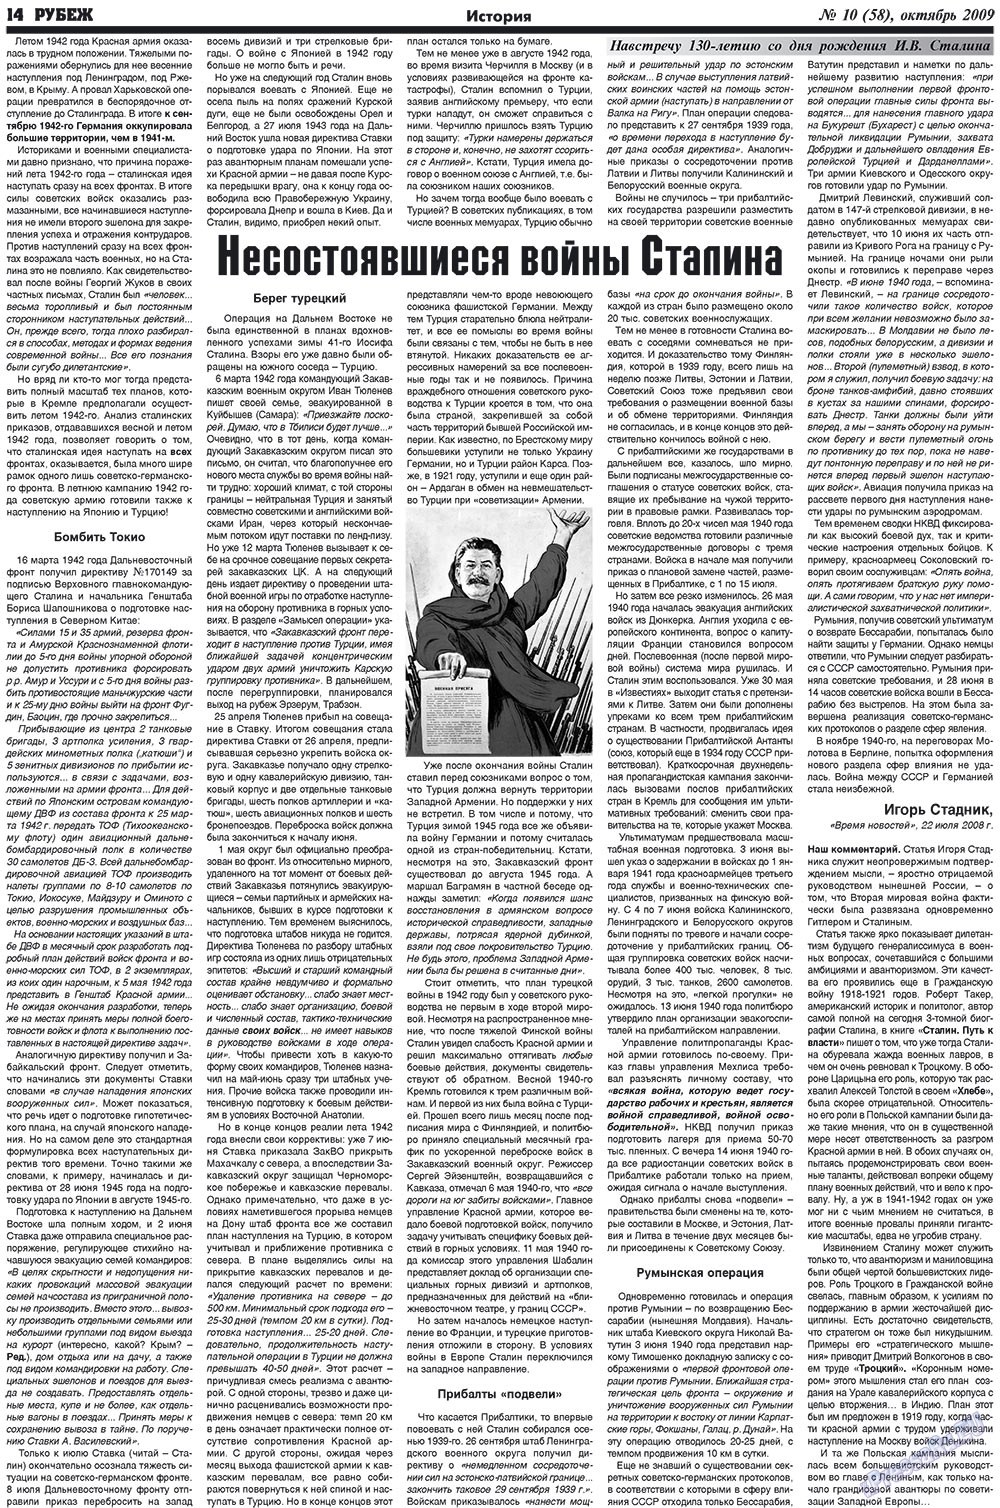 Рубеж, газета. 2009 №10 стр.14